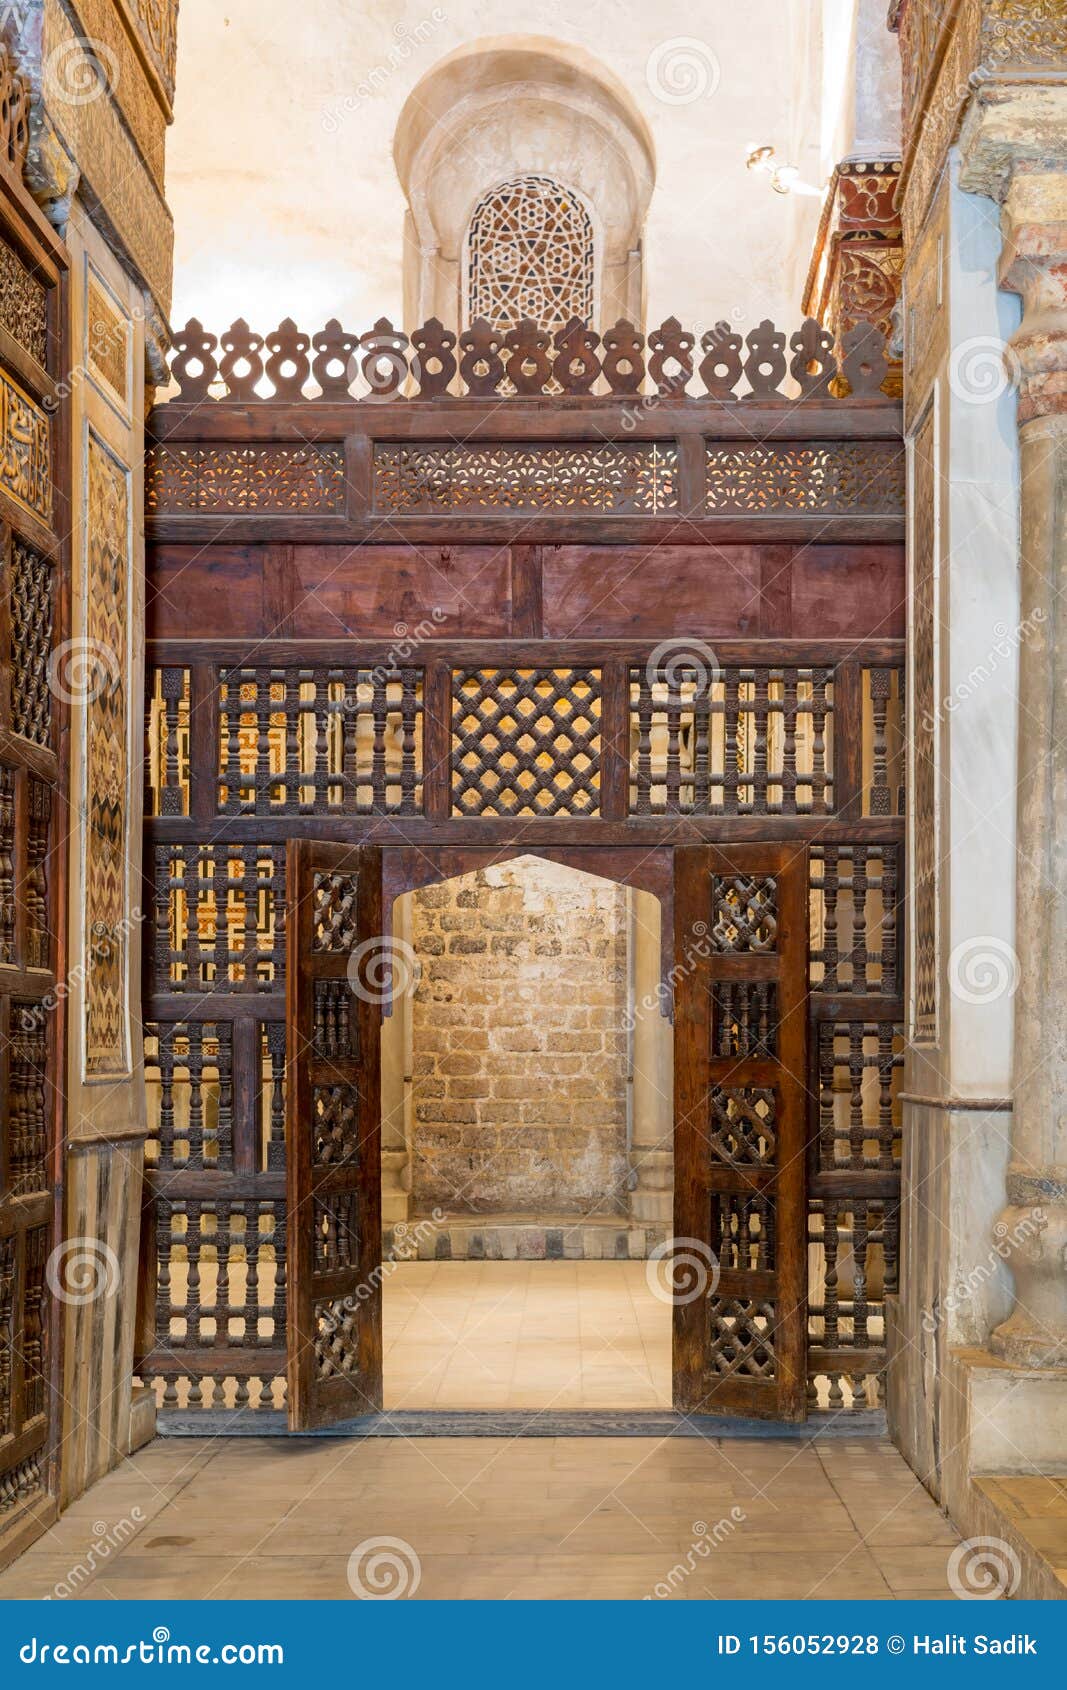 interleaved wooden wall, known as mashrabiya, with wooden ornate door